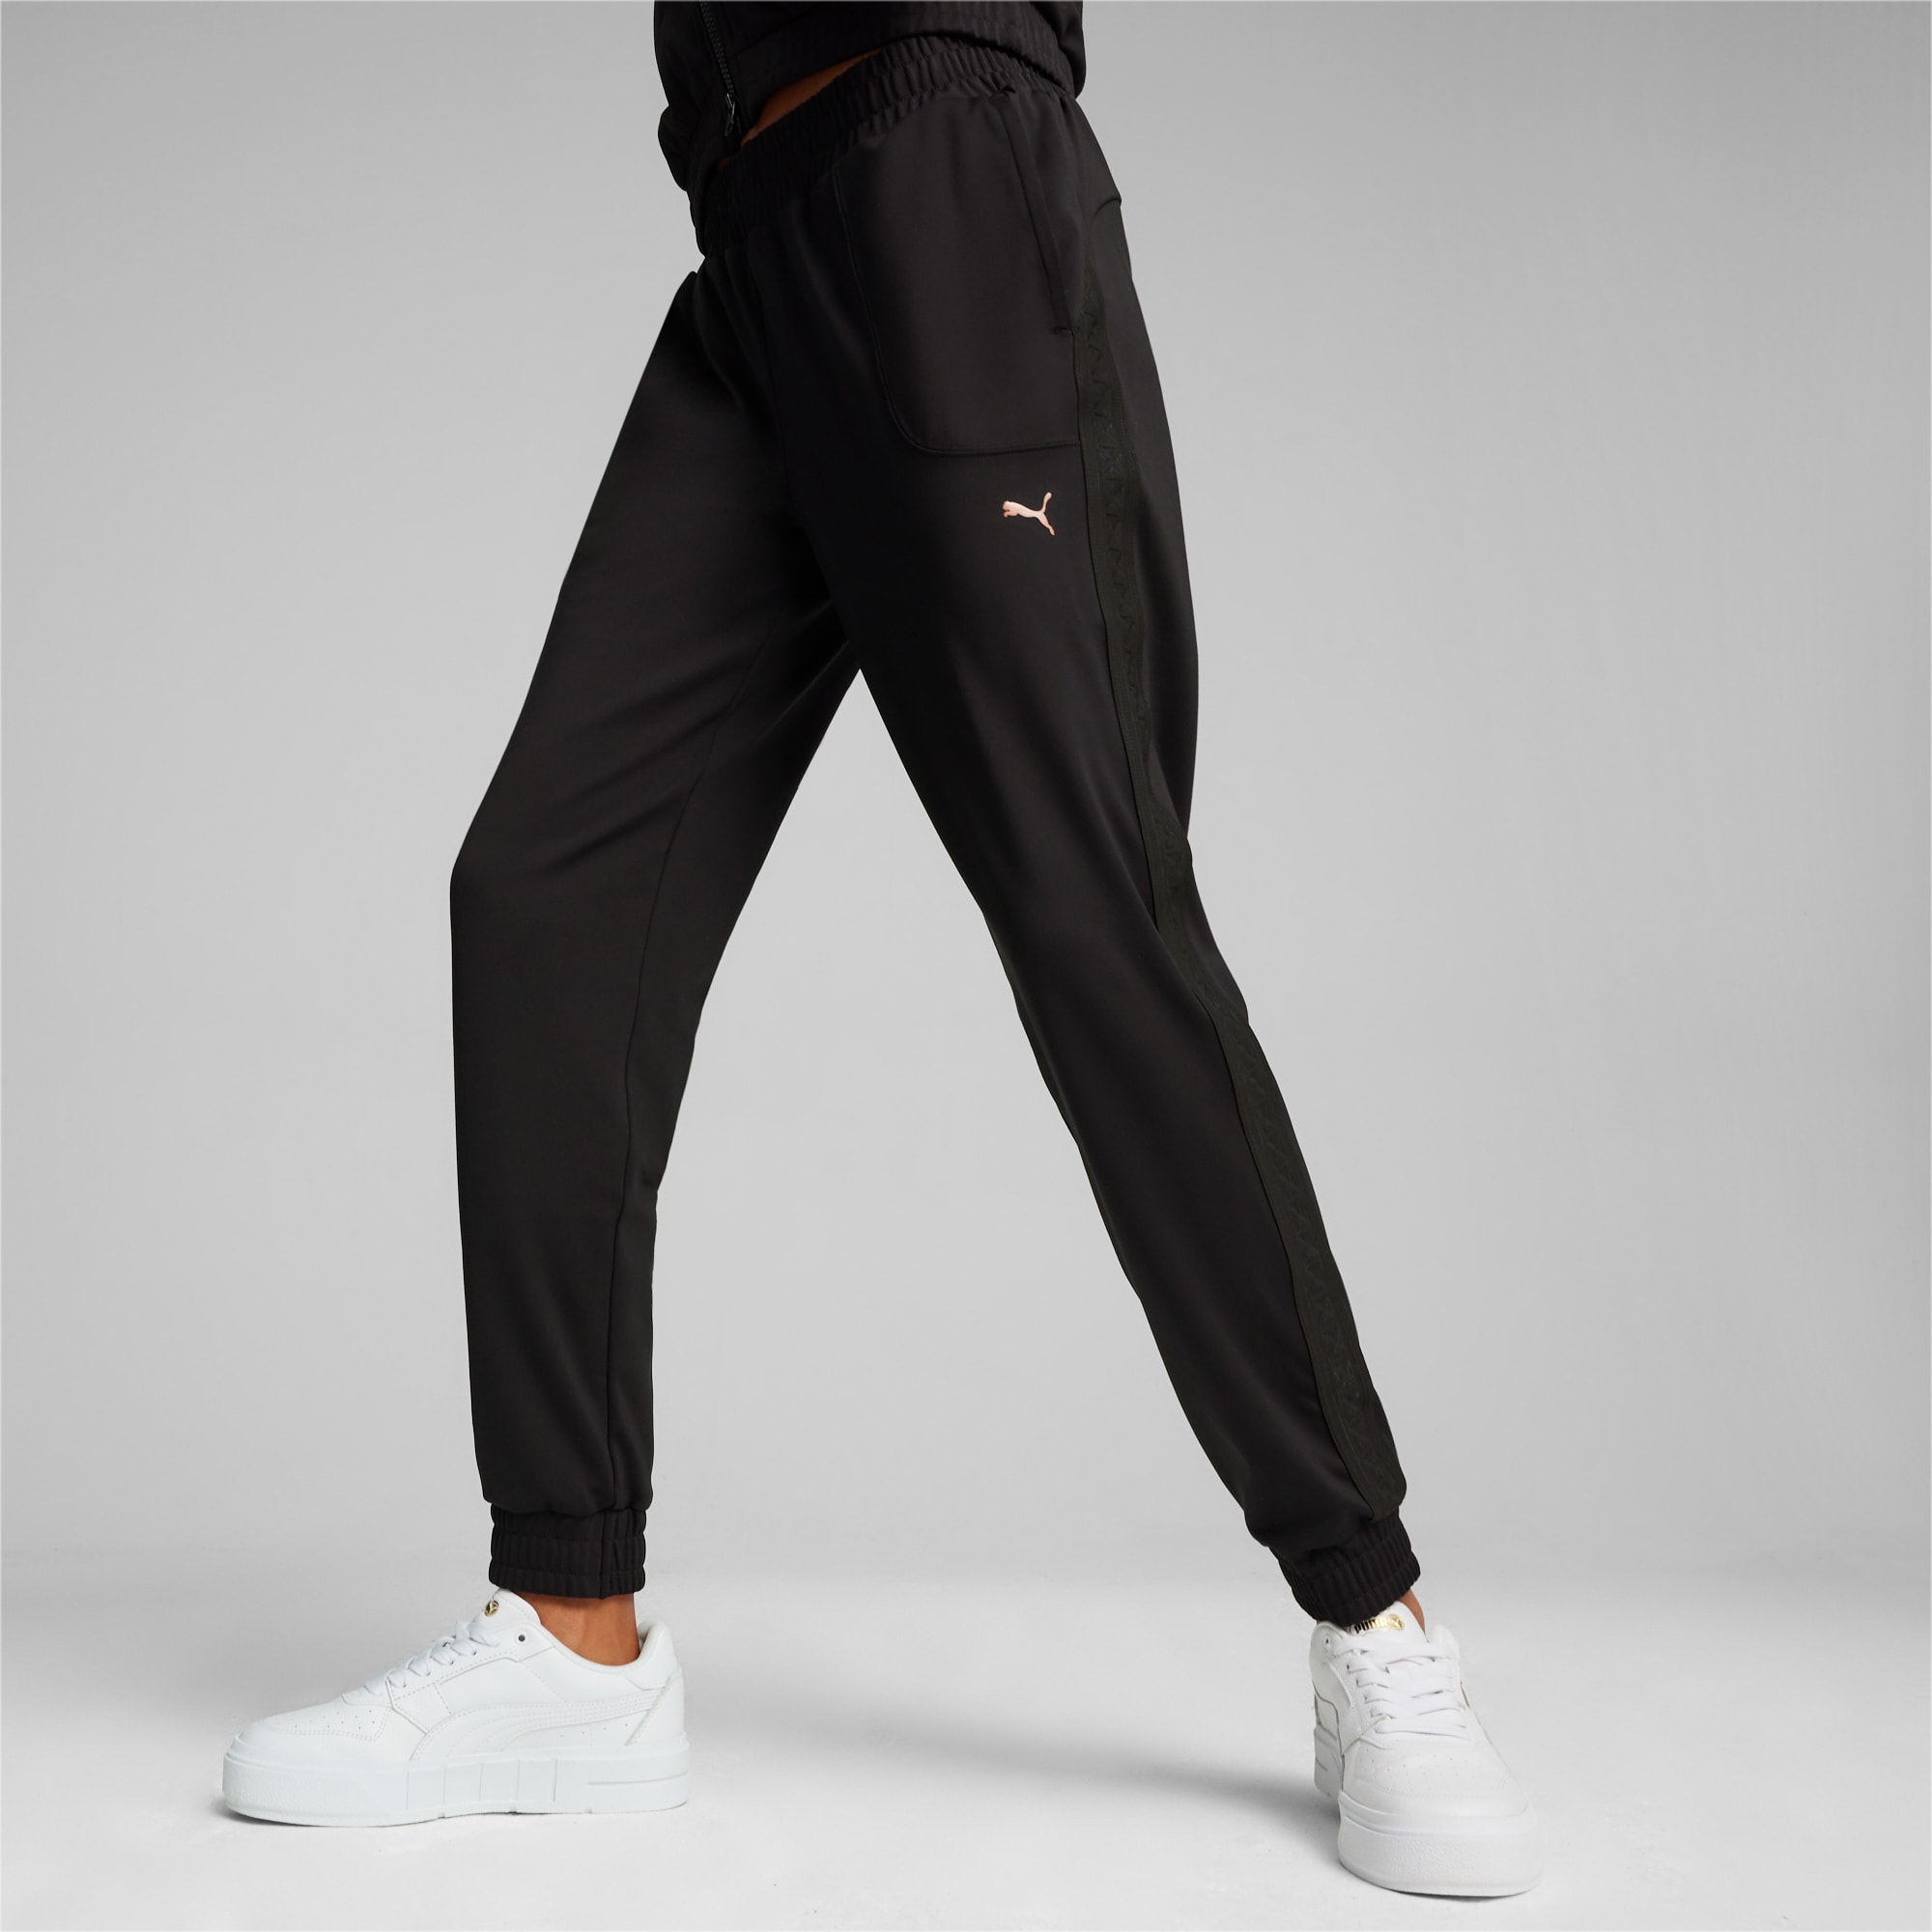 PUMA X Pamela Reif Women's Tapered Sweatpants, Black, Size XXS, Clothing